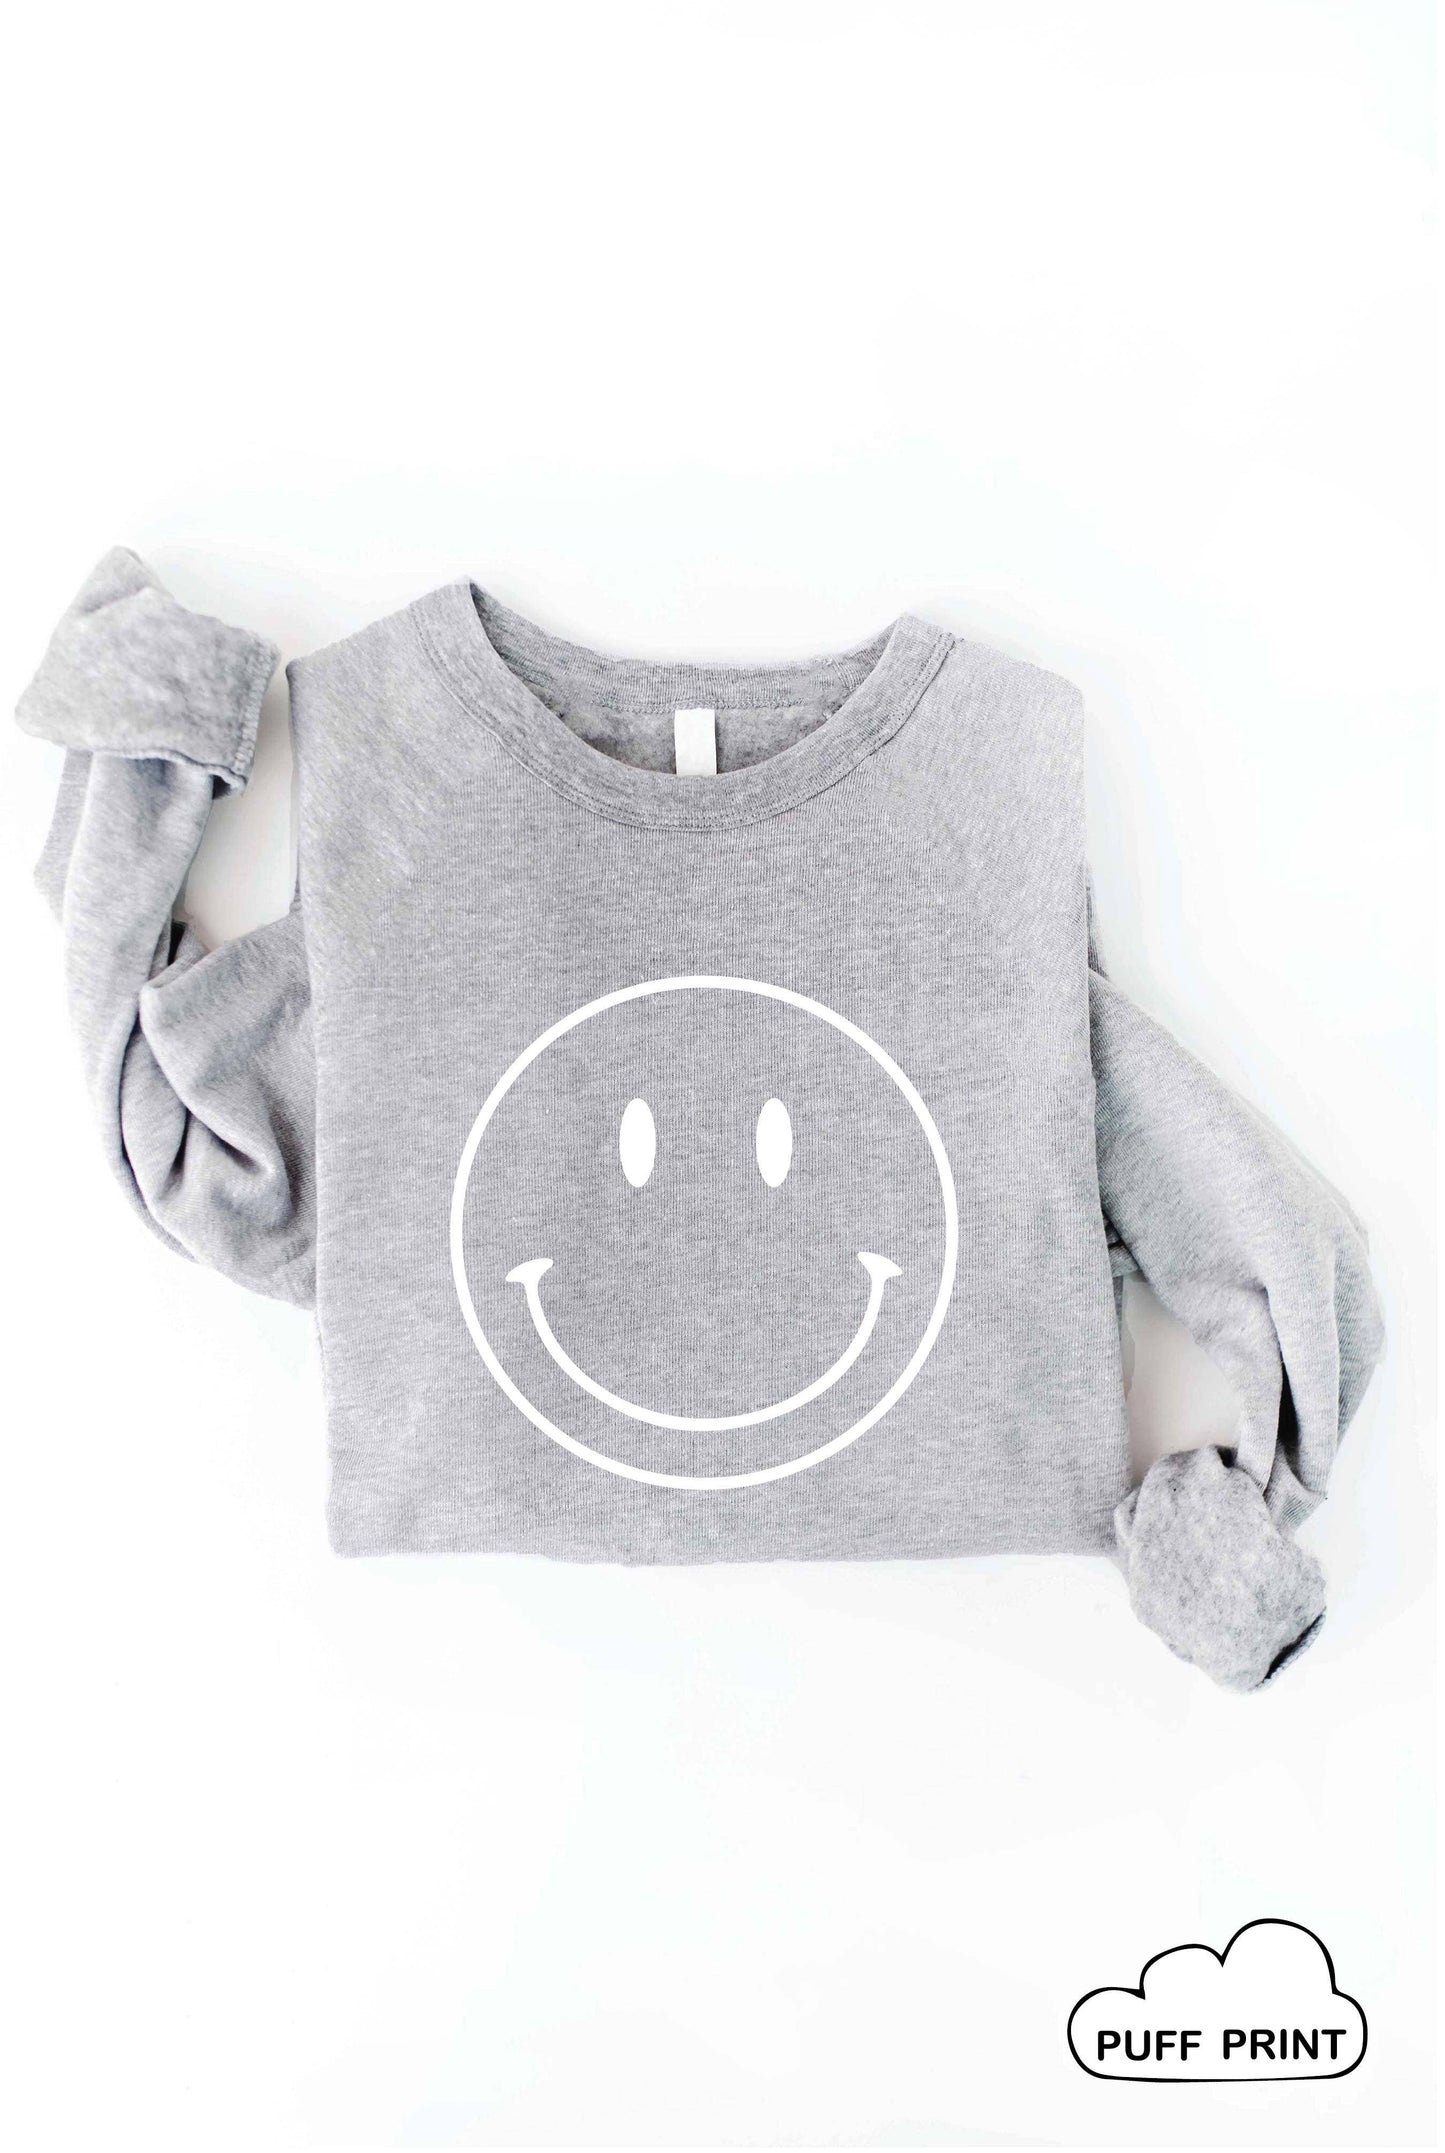 SMILEY FACE Puff Print Graphic Sweatshirt